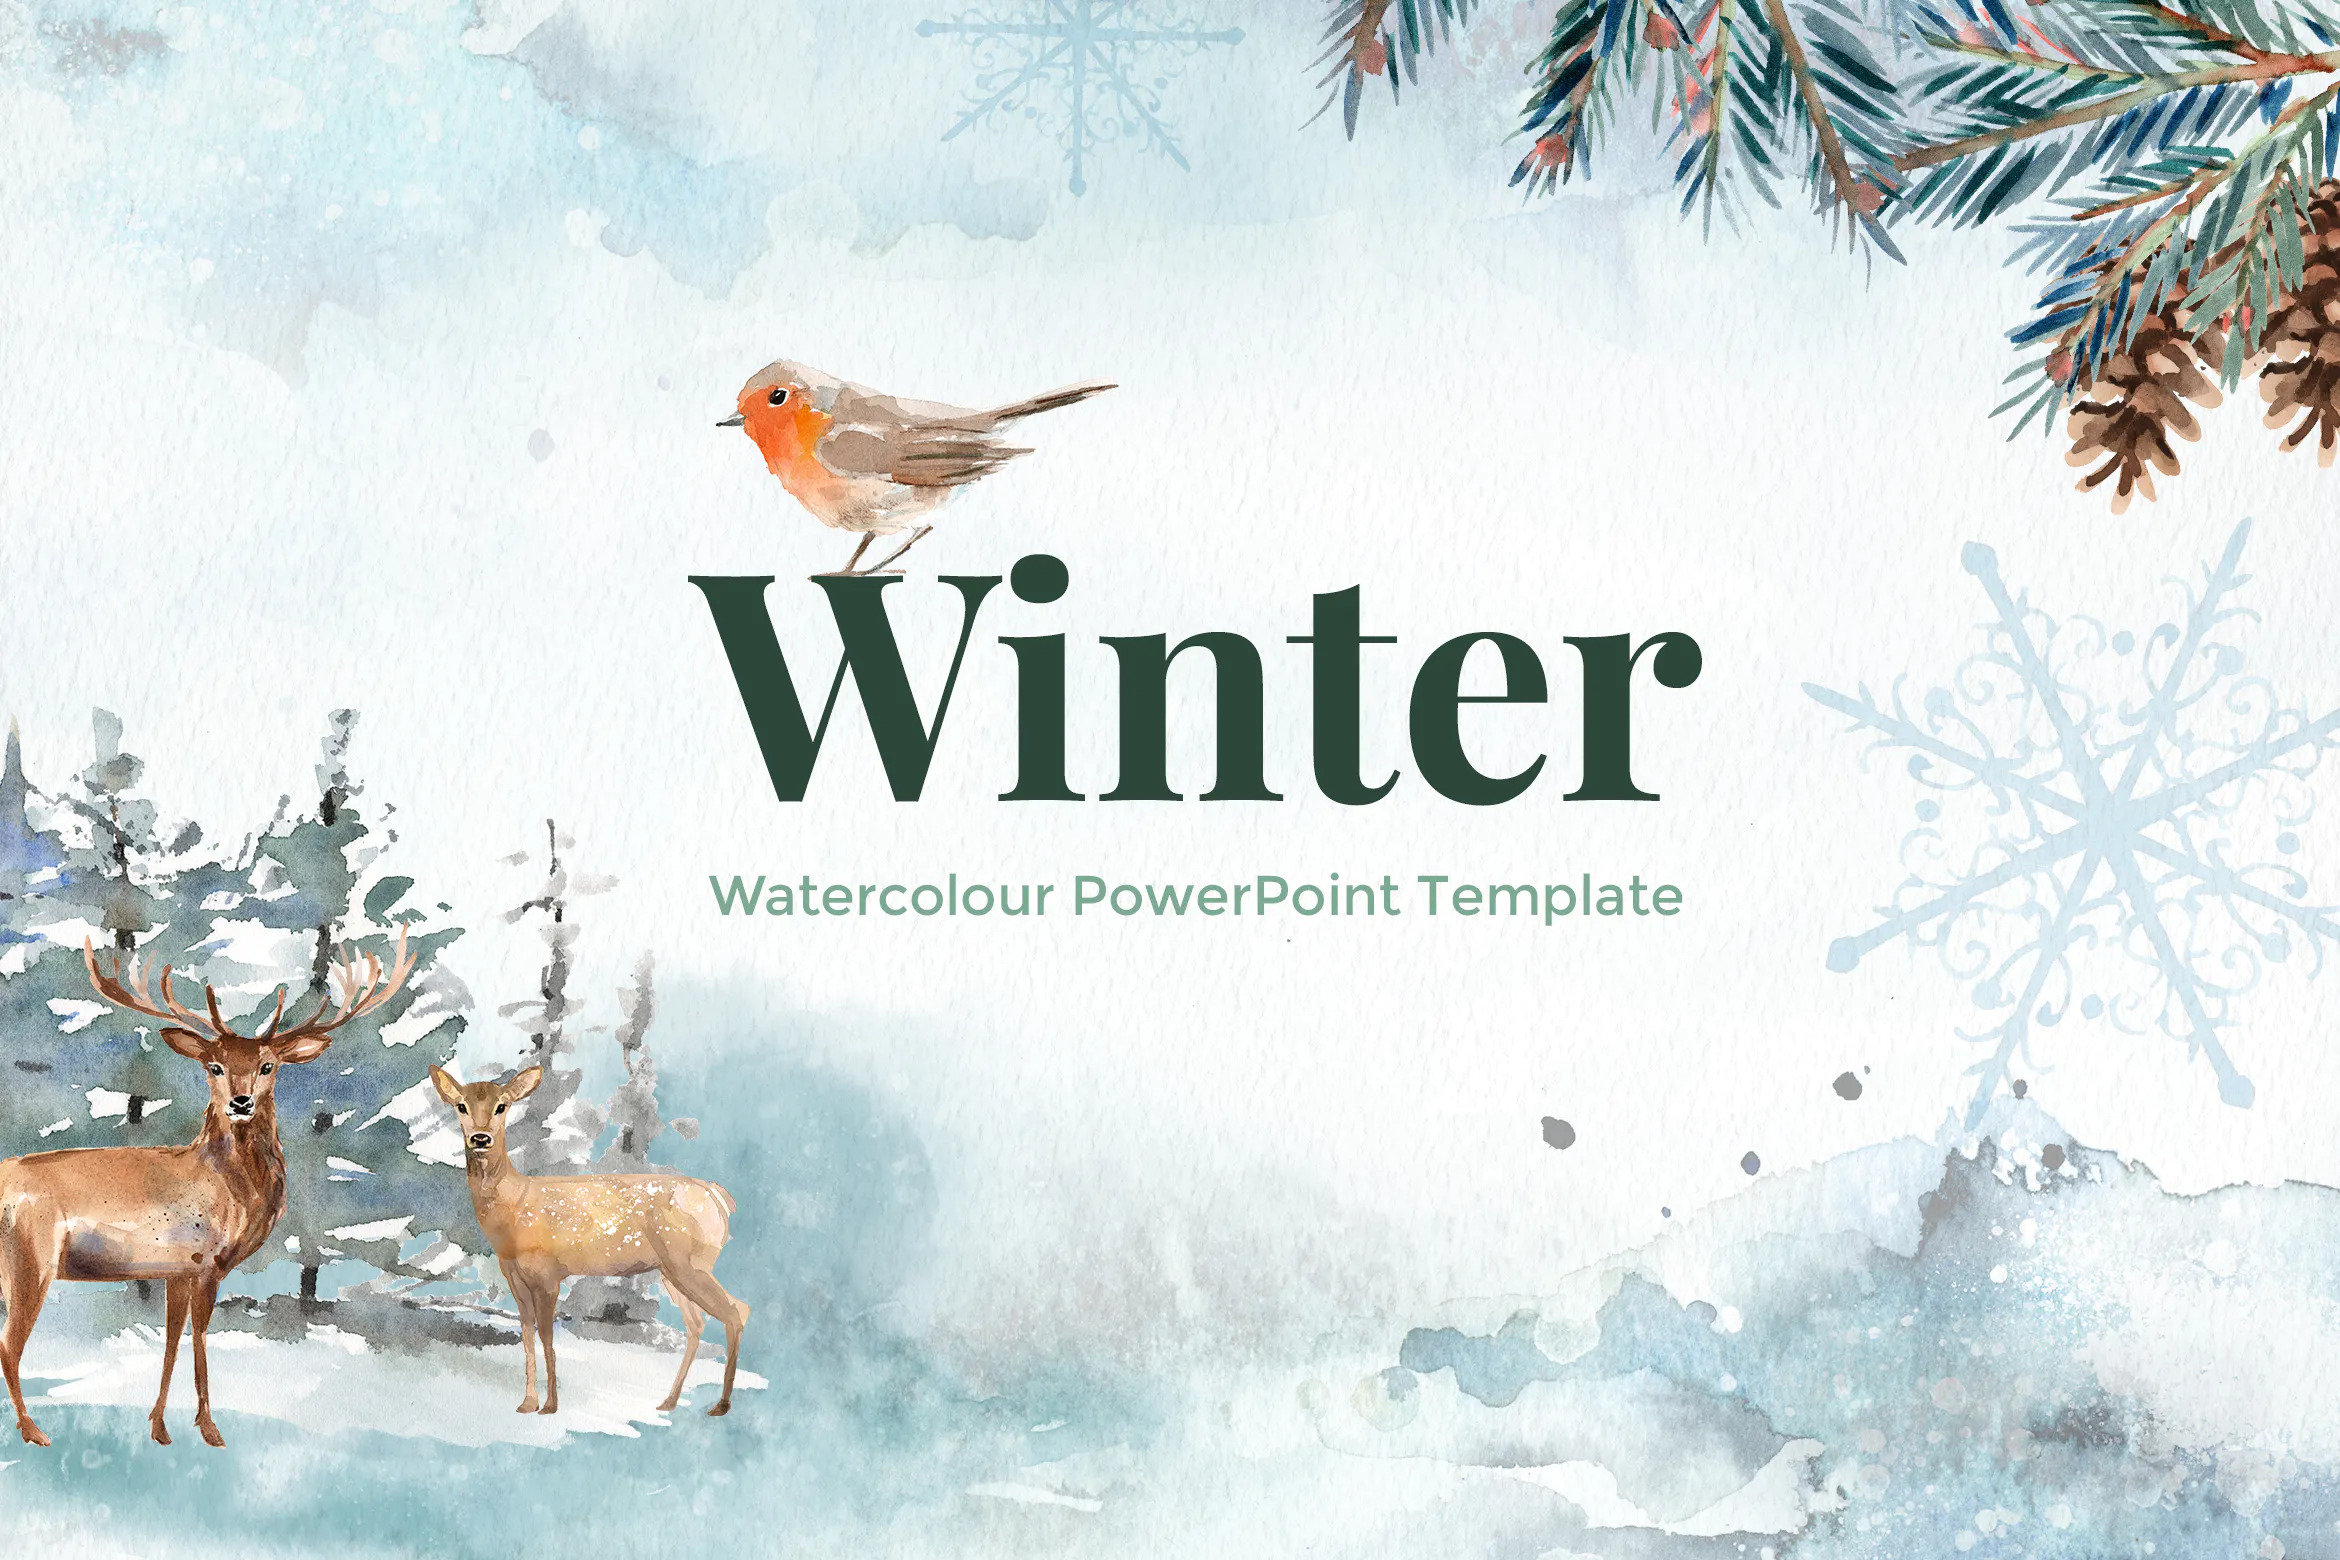 presentation for winter season